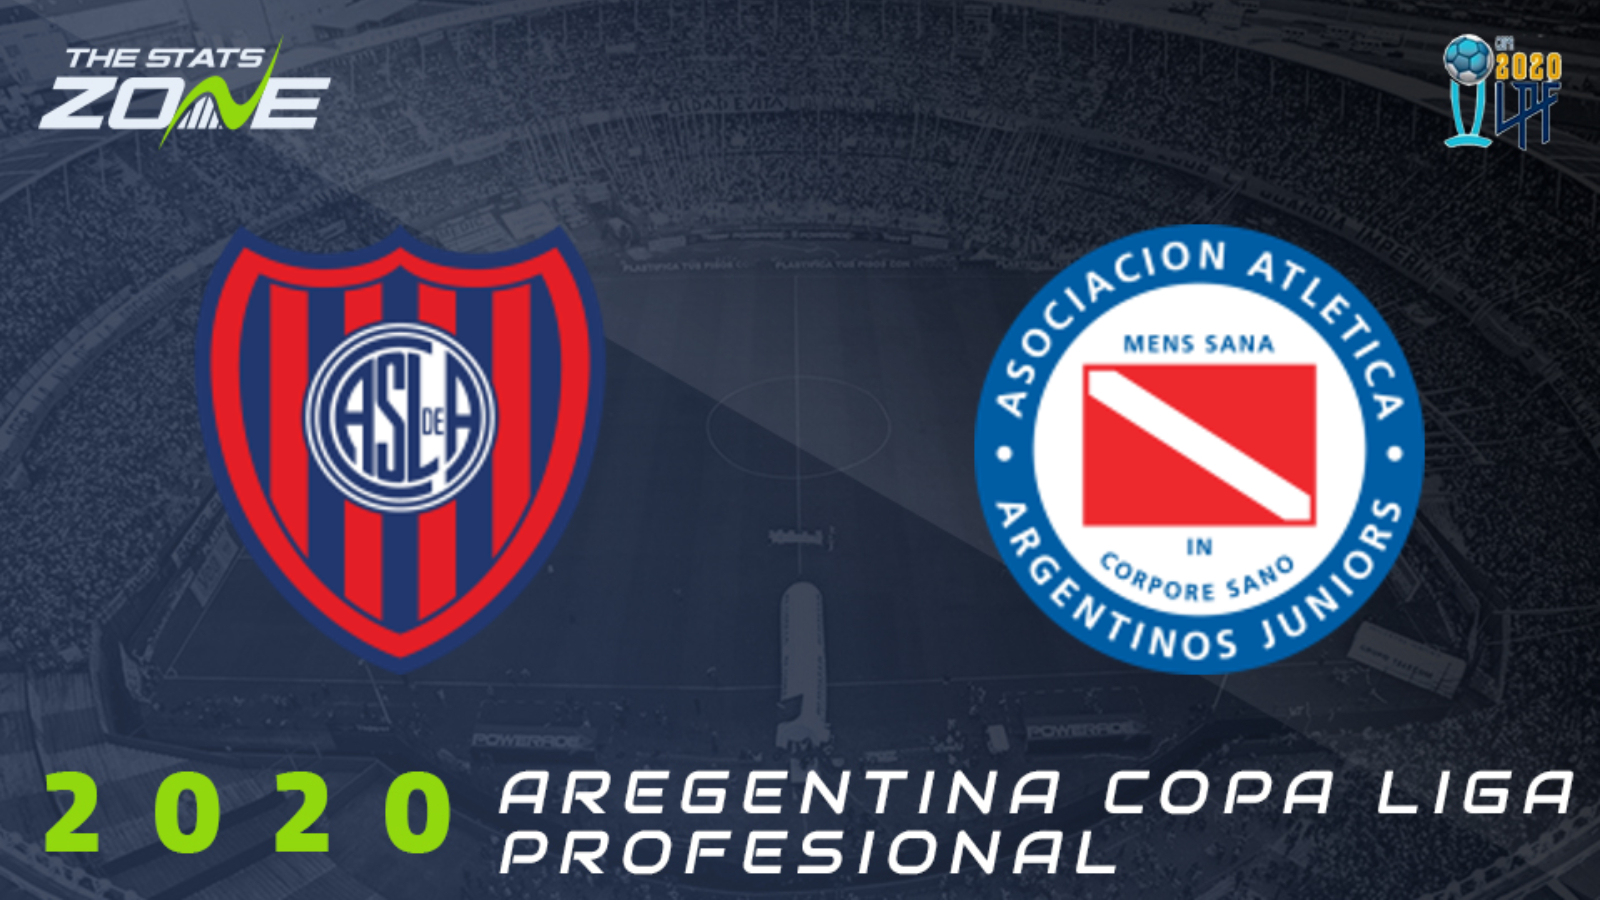 2020 Argentine Copa Liga Profesional - San Lorenzo vs ...